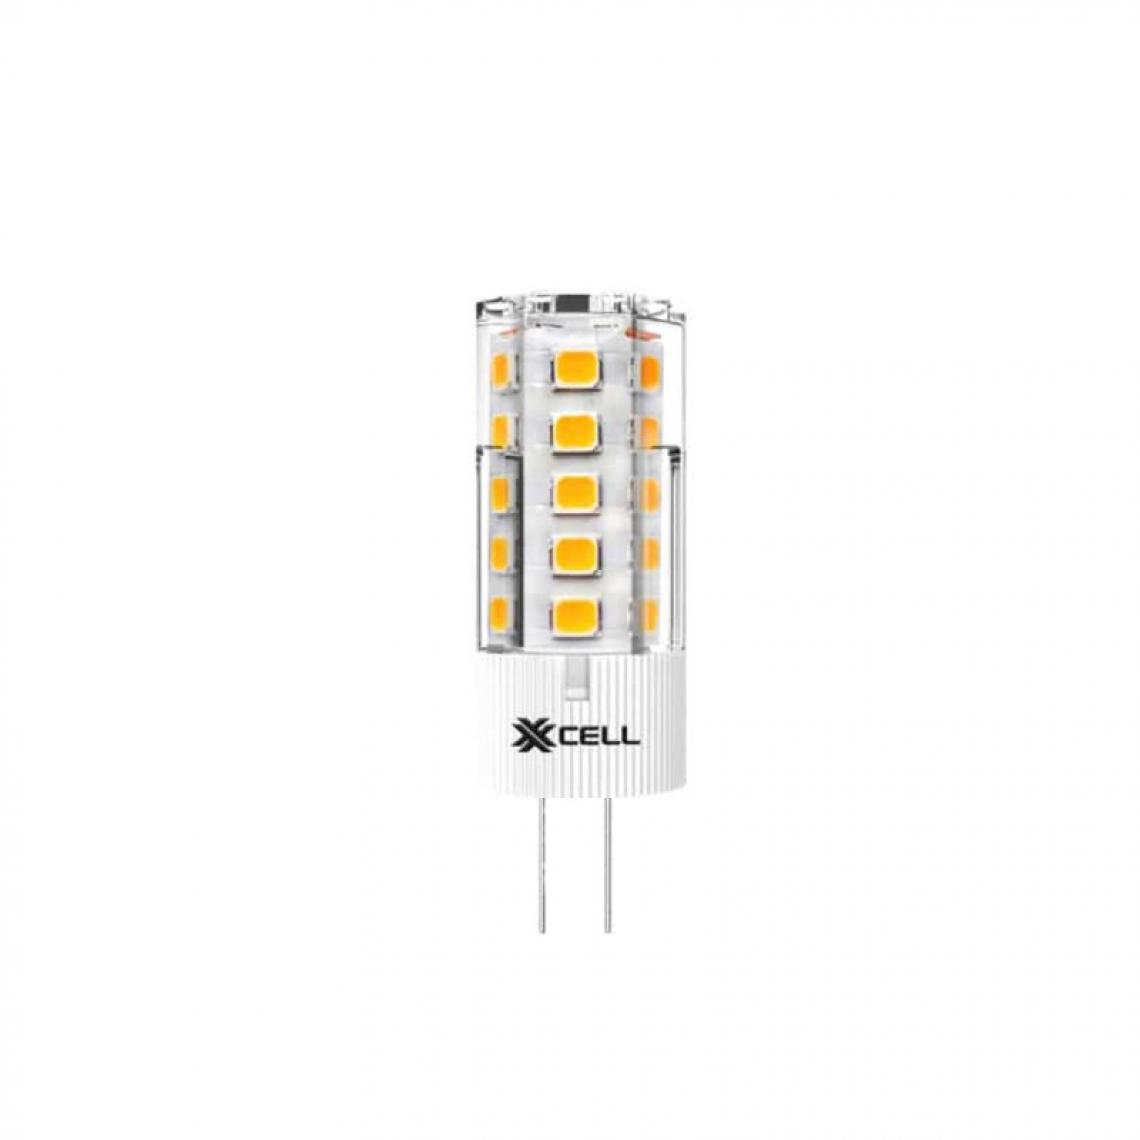 Xxcell - Ampoule LED XXCELL BI PIN - G4 12V 2.5W - 250 lumens - équivalent 25W - Ampoules LED